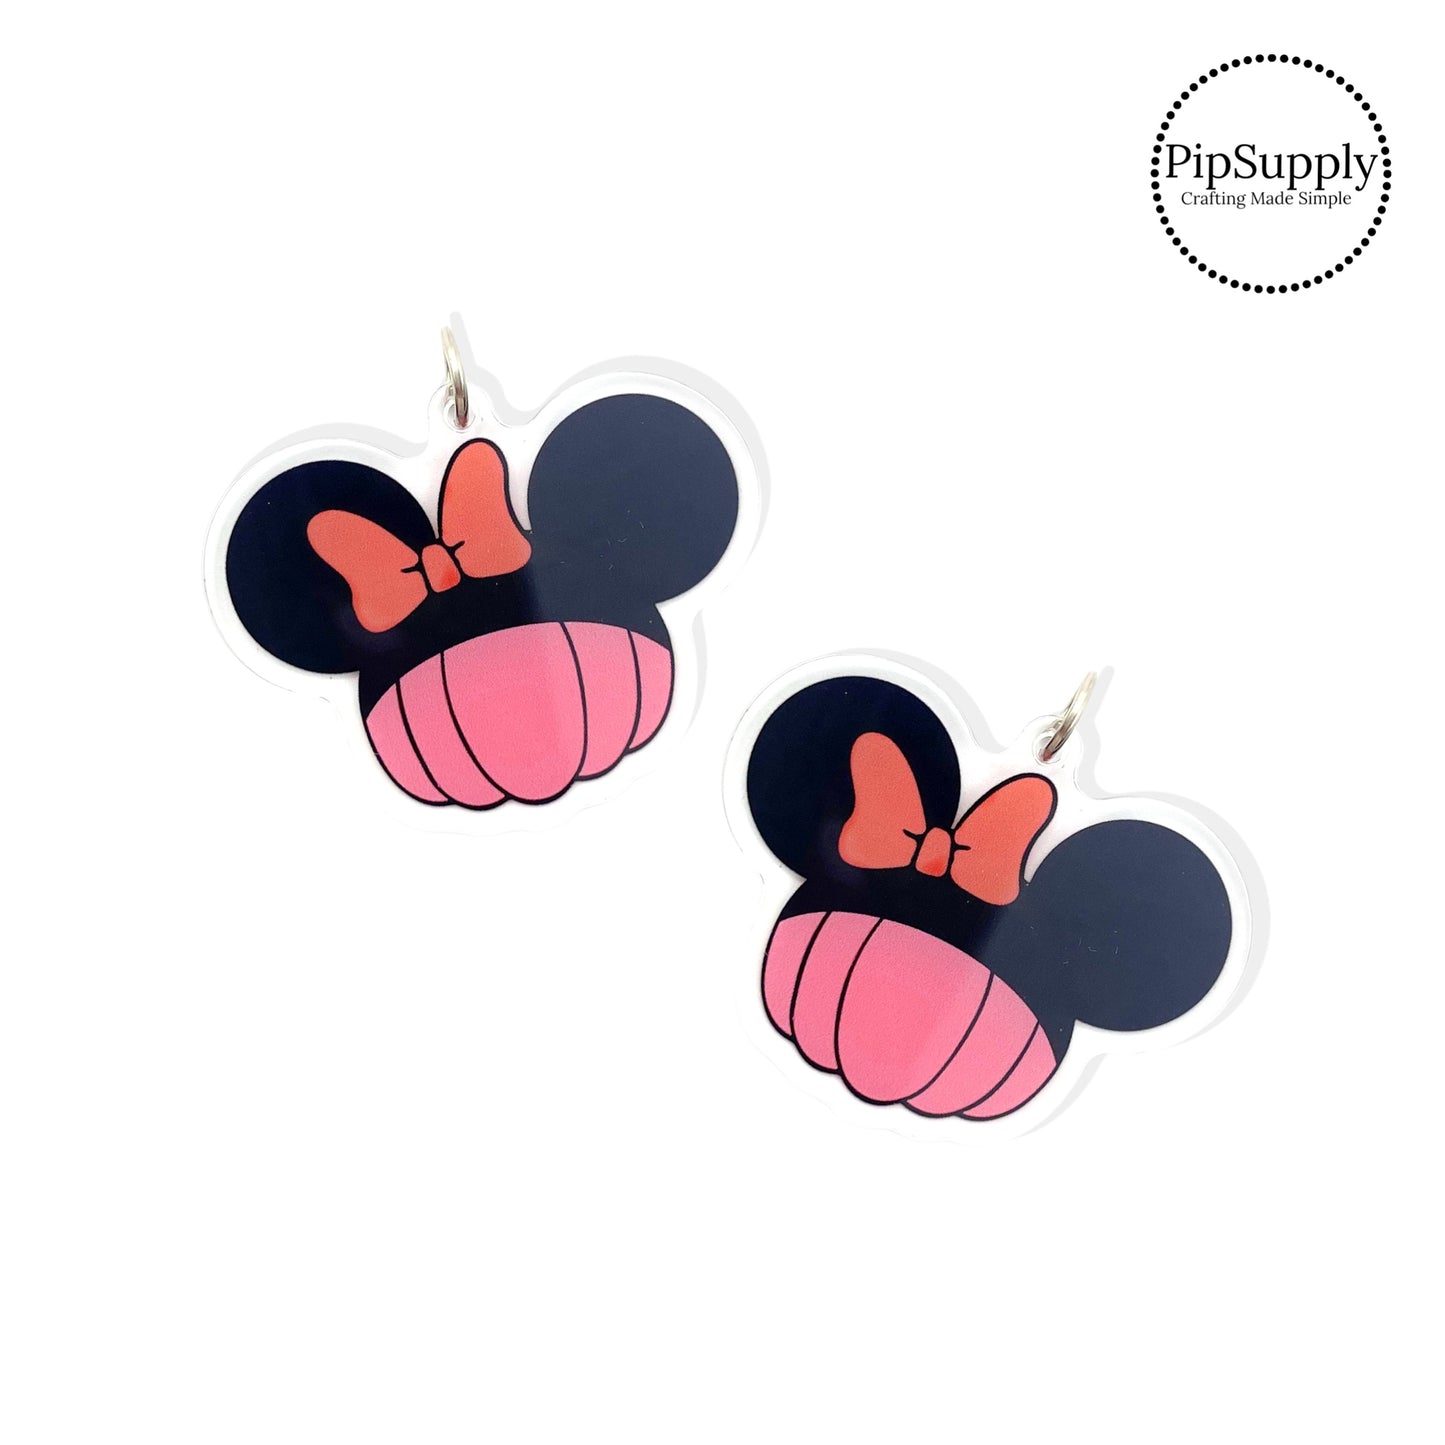 Mouse ears with bow on pumpkin acrylic pendant